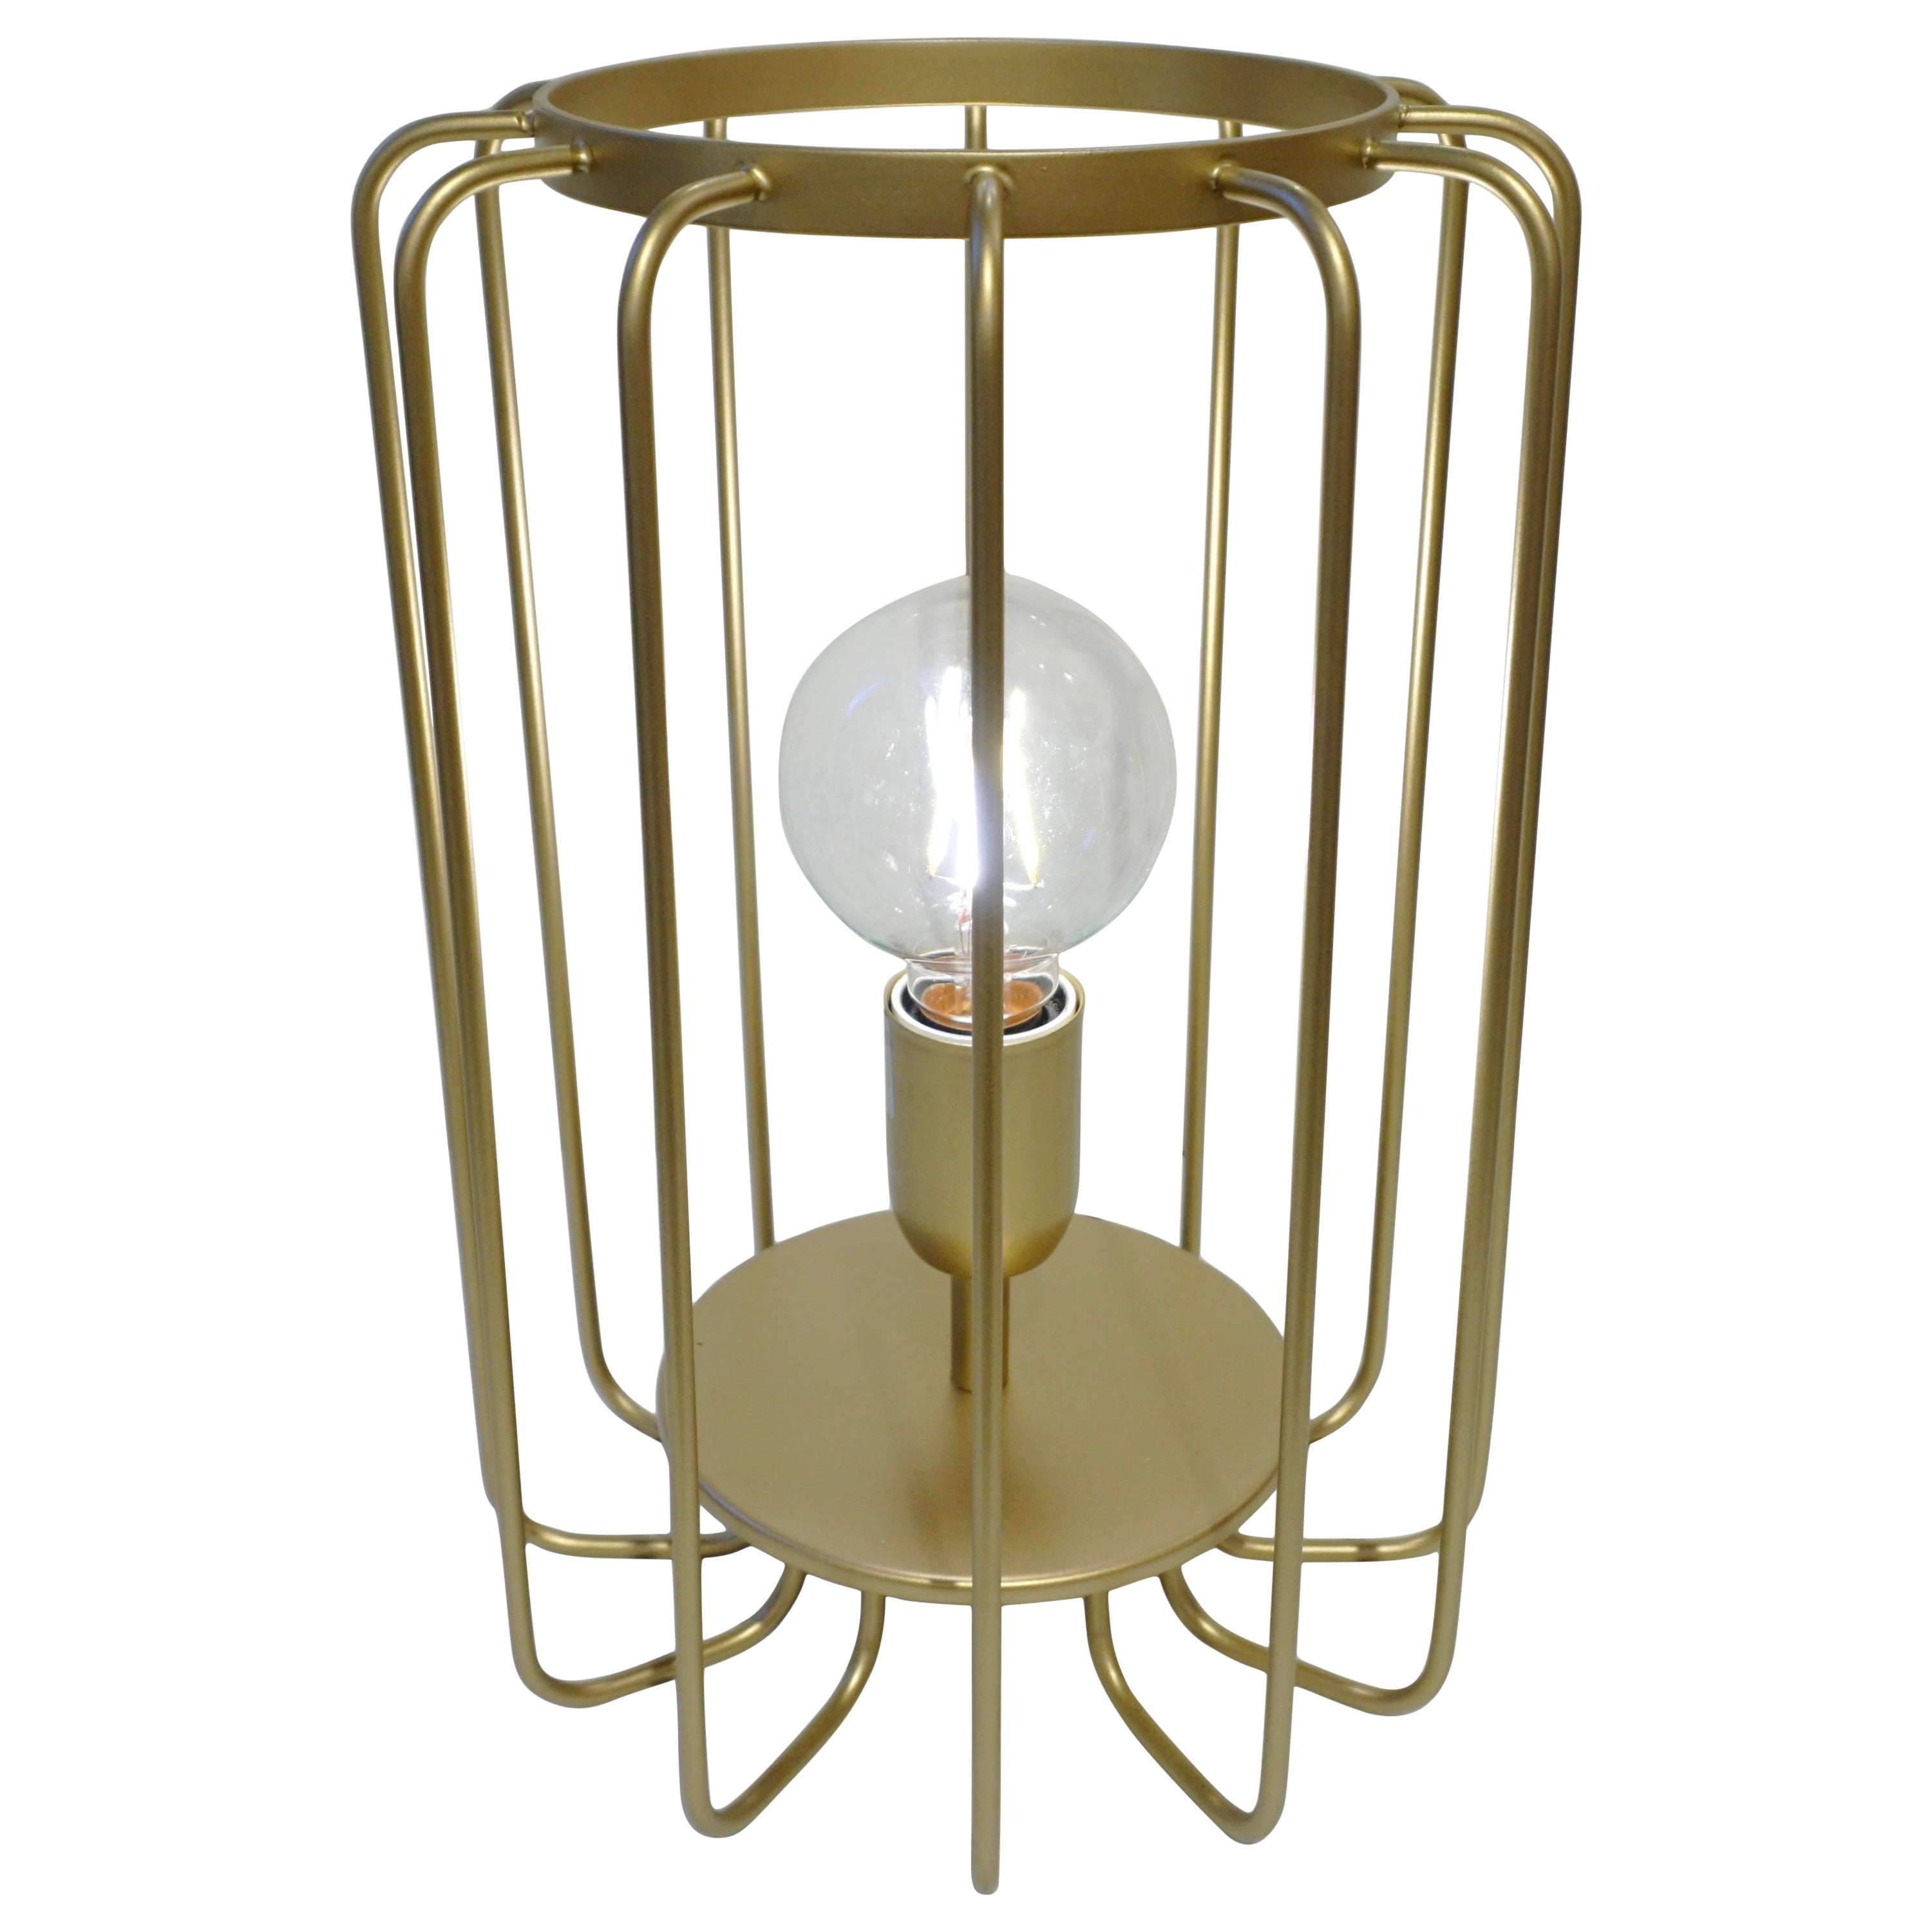 Cosulich Interiors - Lampe de bureau italienne minimaliste et futuriste en acier et laiton doré